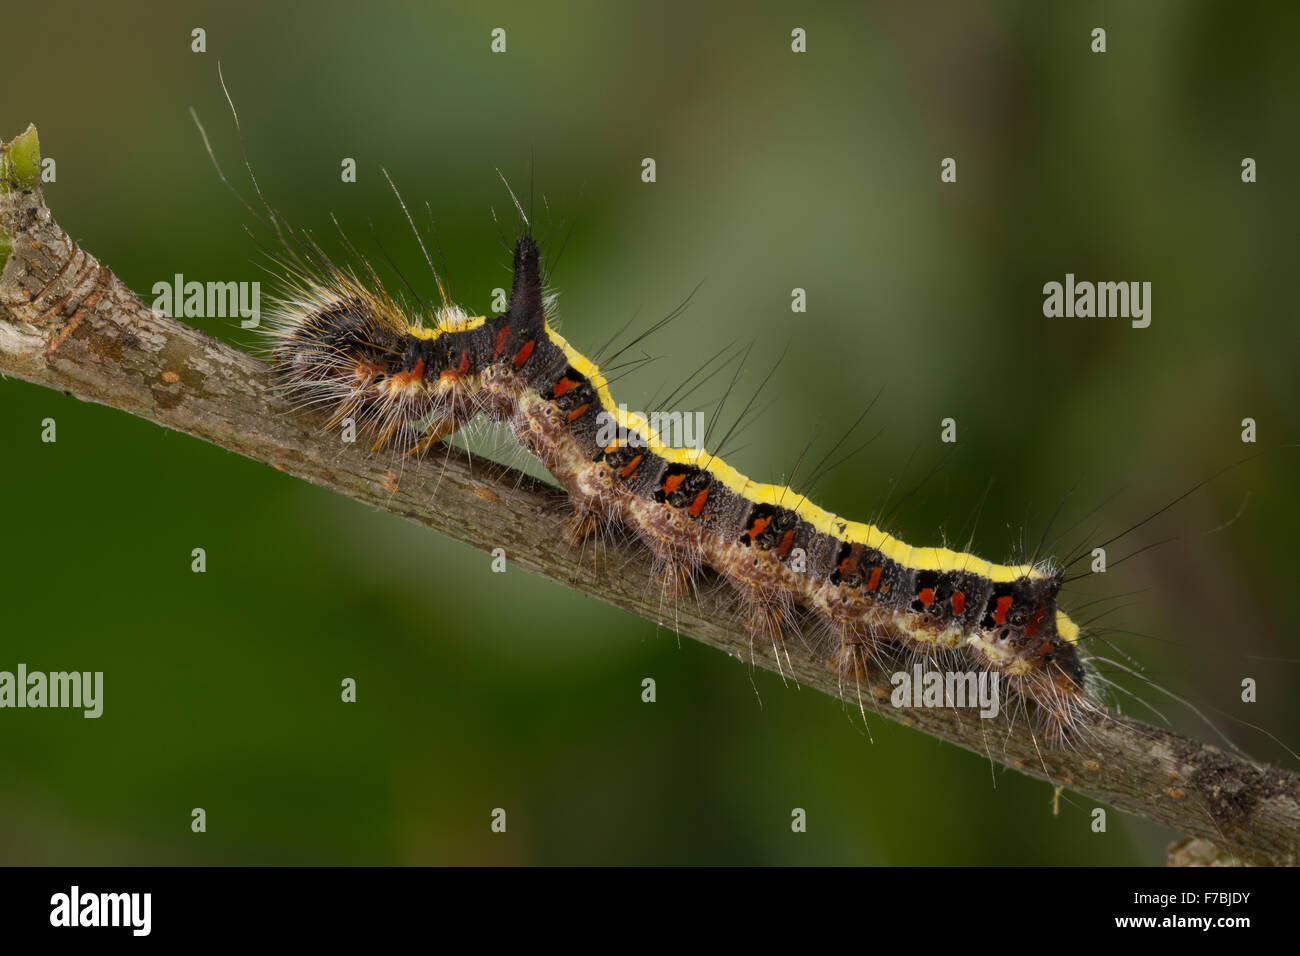 Grey dagger moth, caterpillar, Pfeileule, Raupe, Pfeil-Eule, Schleheneule, Acronicta psi, Acronycta psi, Apatele psi Stock Photo